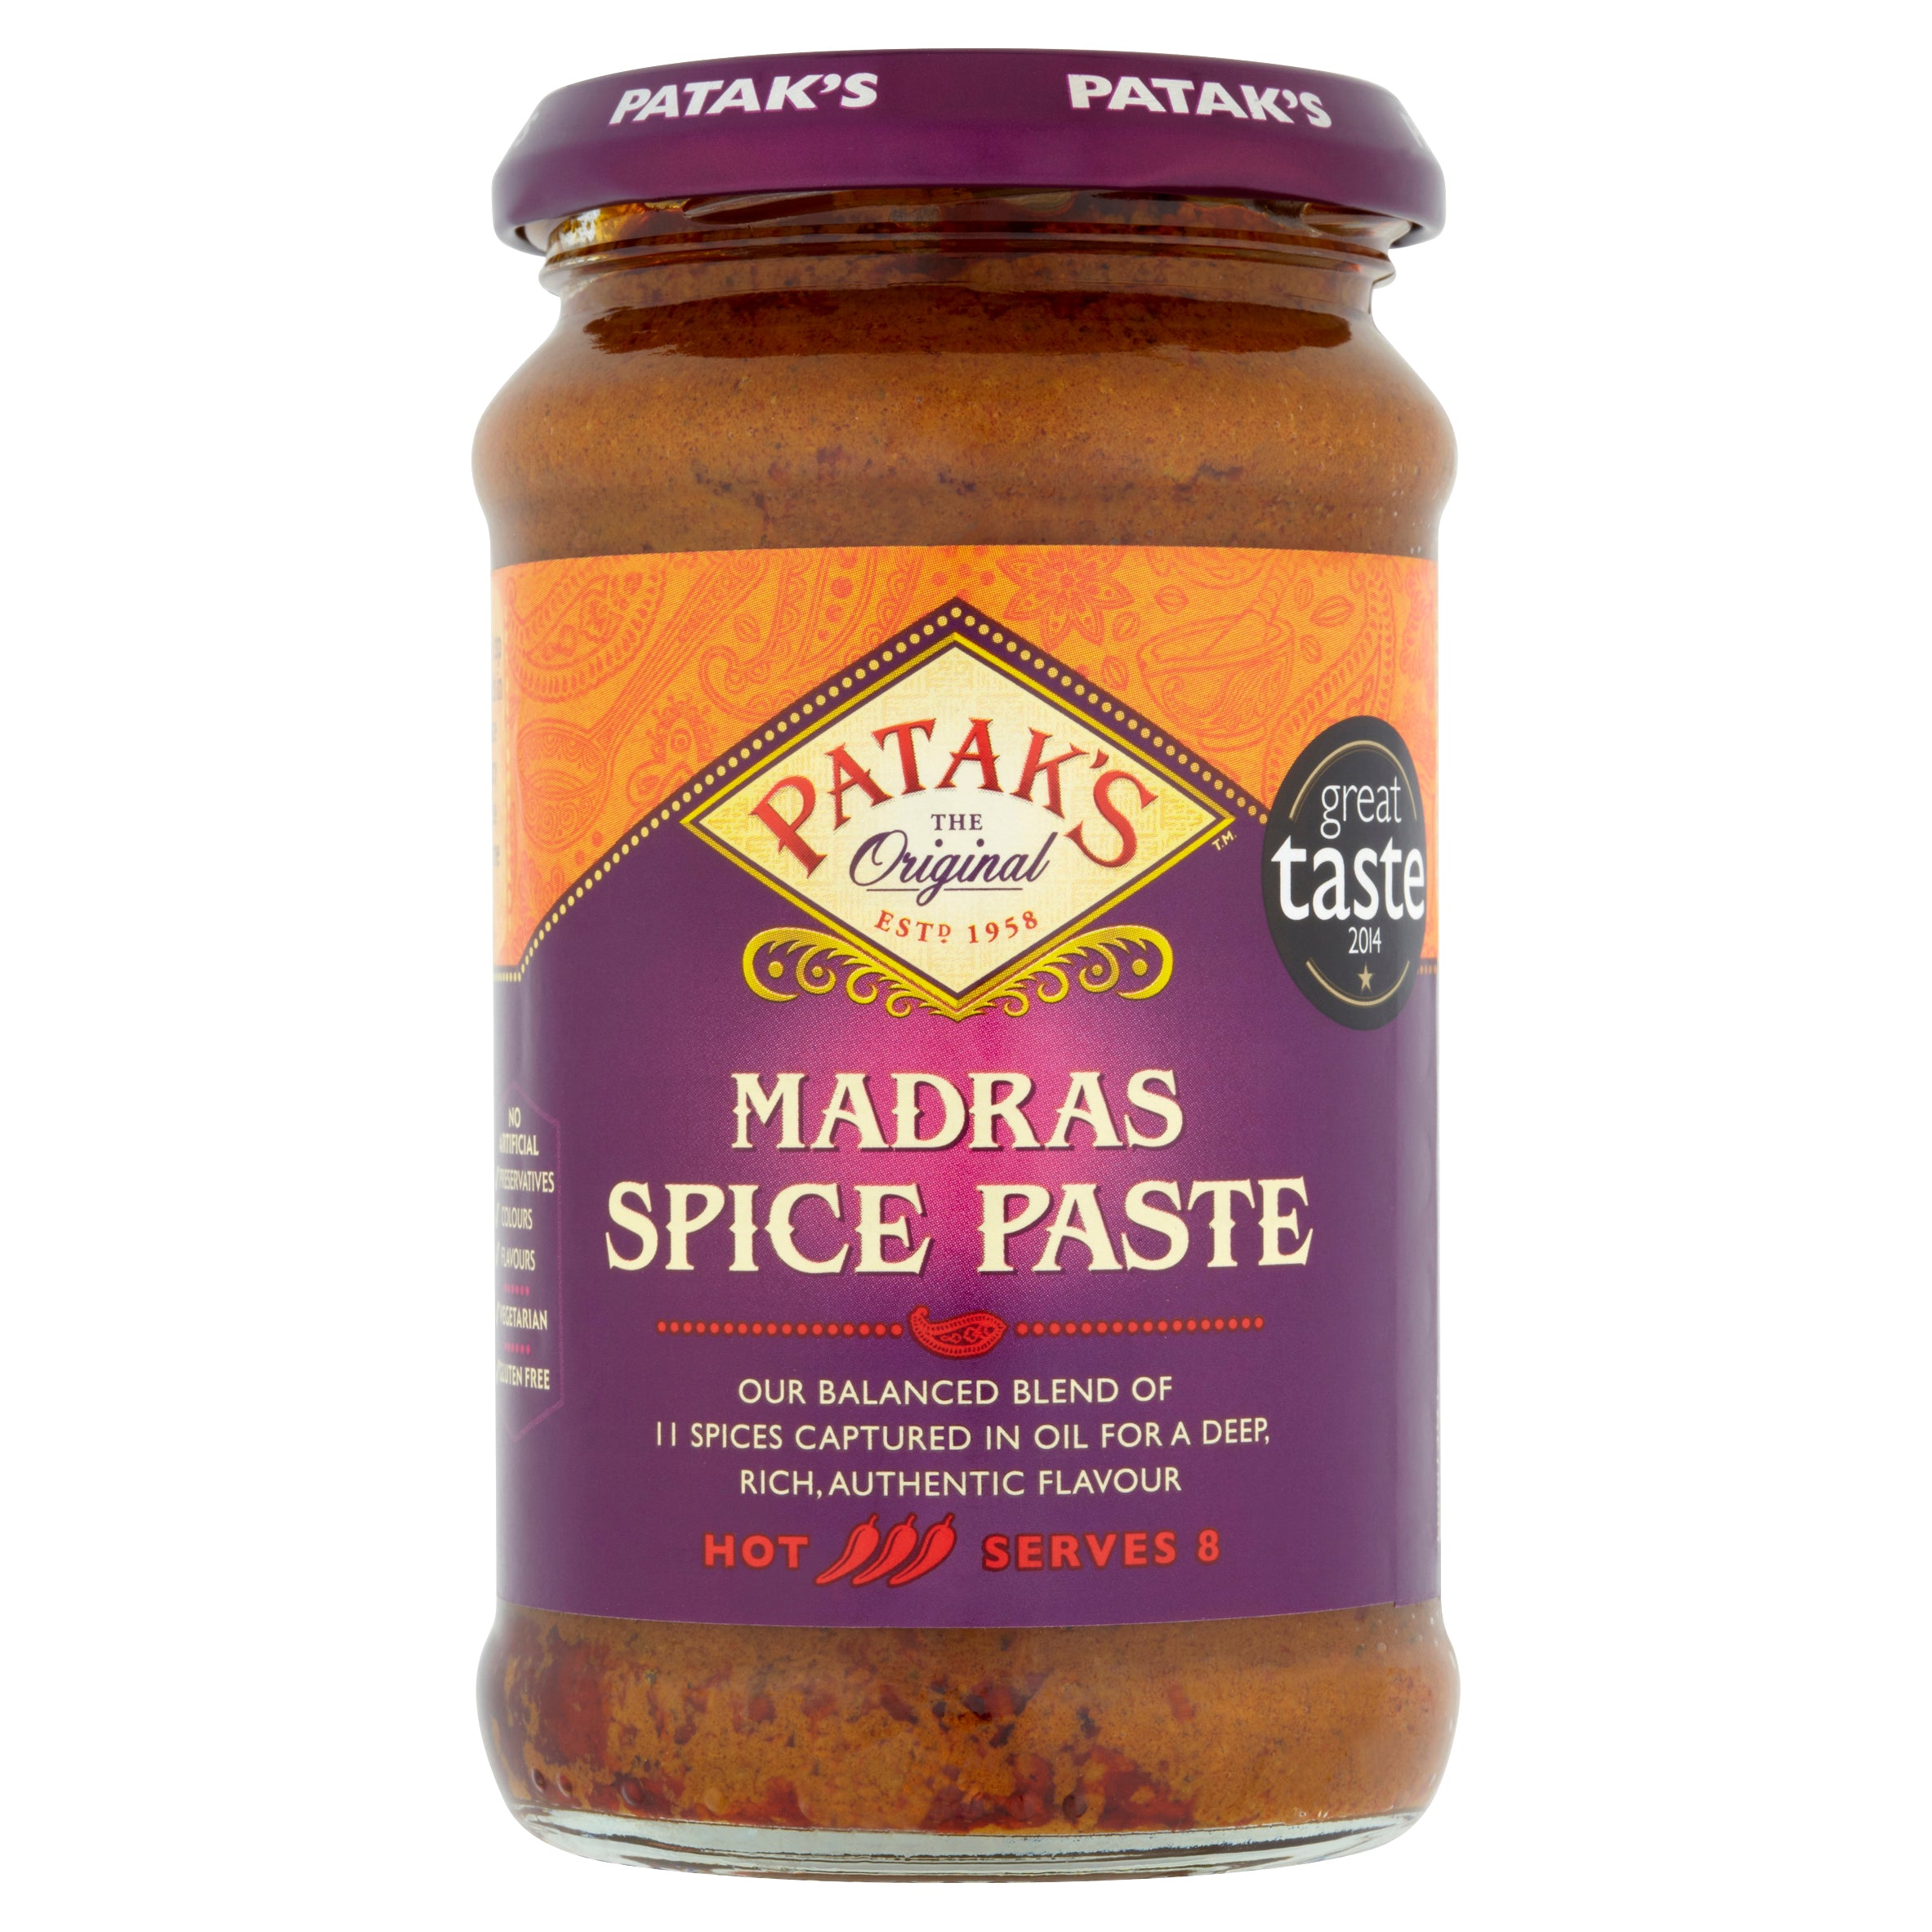 Madras Spice Paste (Hot) 283g by Patak's